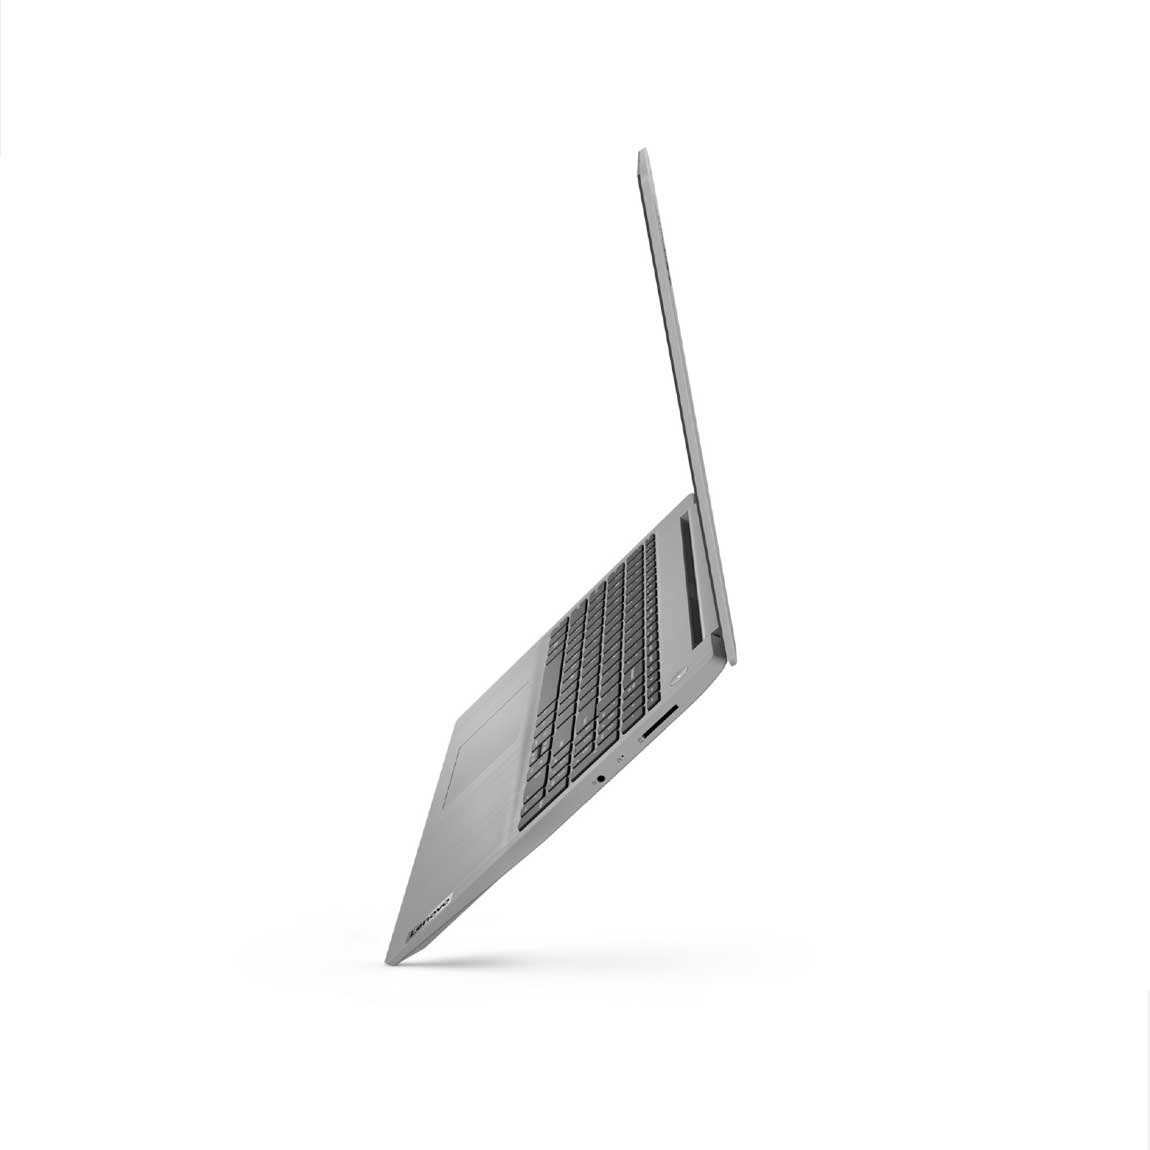 Lenovo L3 I7 (10510) | 8GB Ram | 1TB HDD | 2GB (Mx130) Laptop